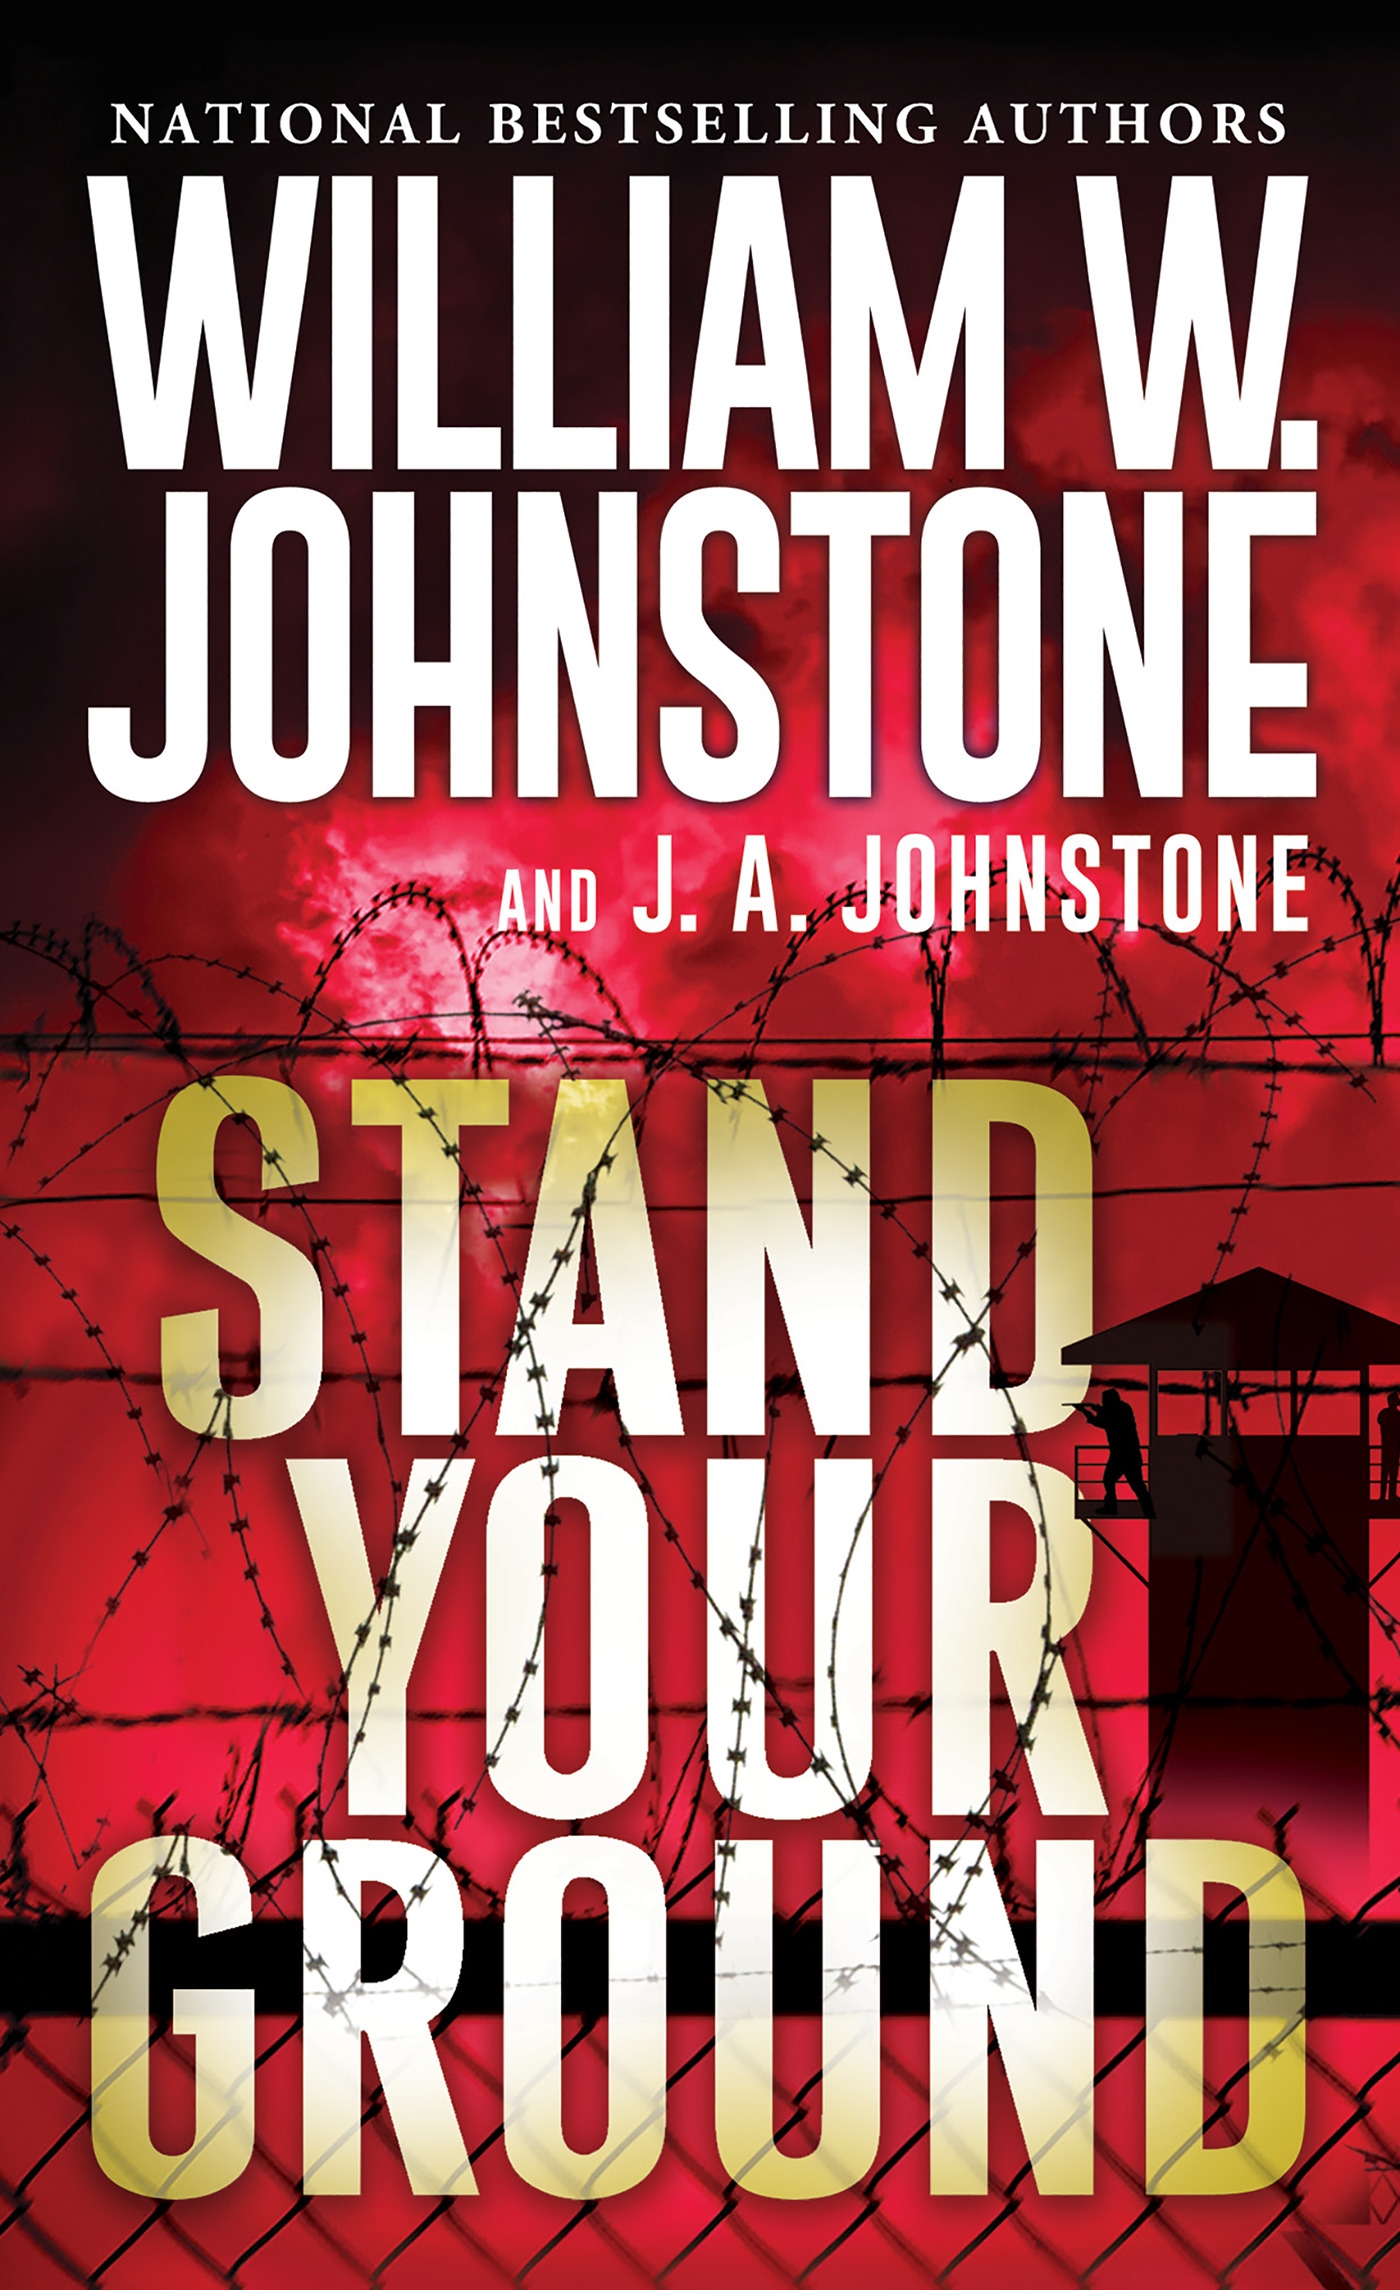 Stand Your Ground by William W. Johnstone - Penguin Books Australia